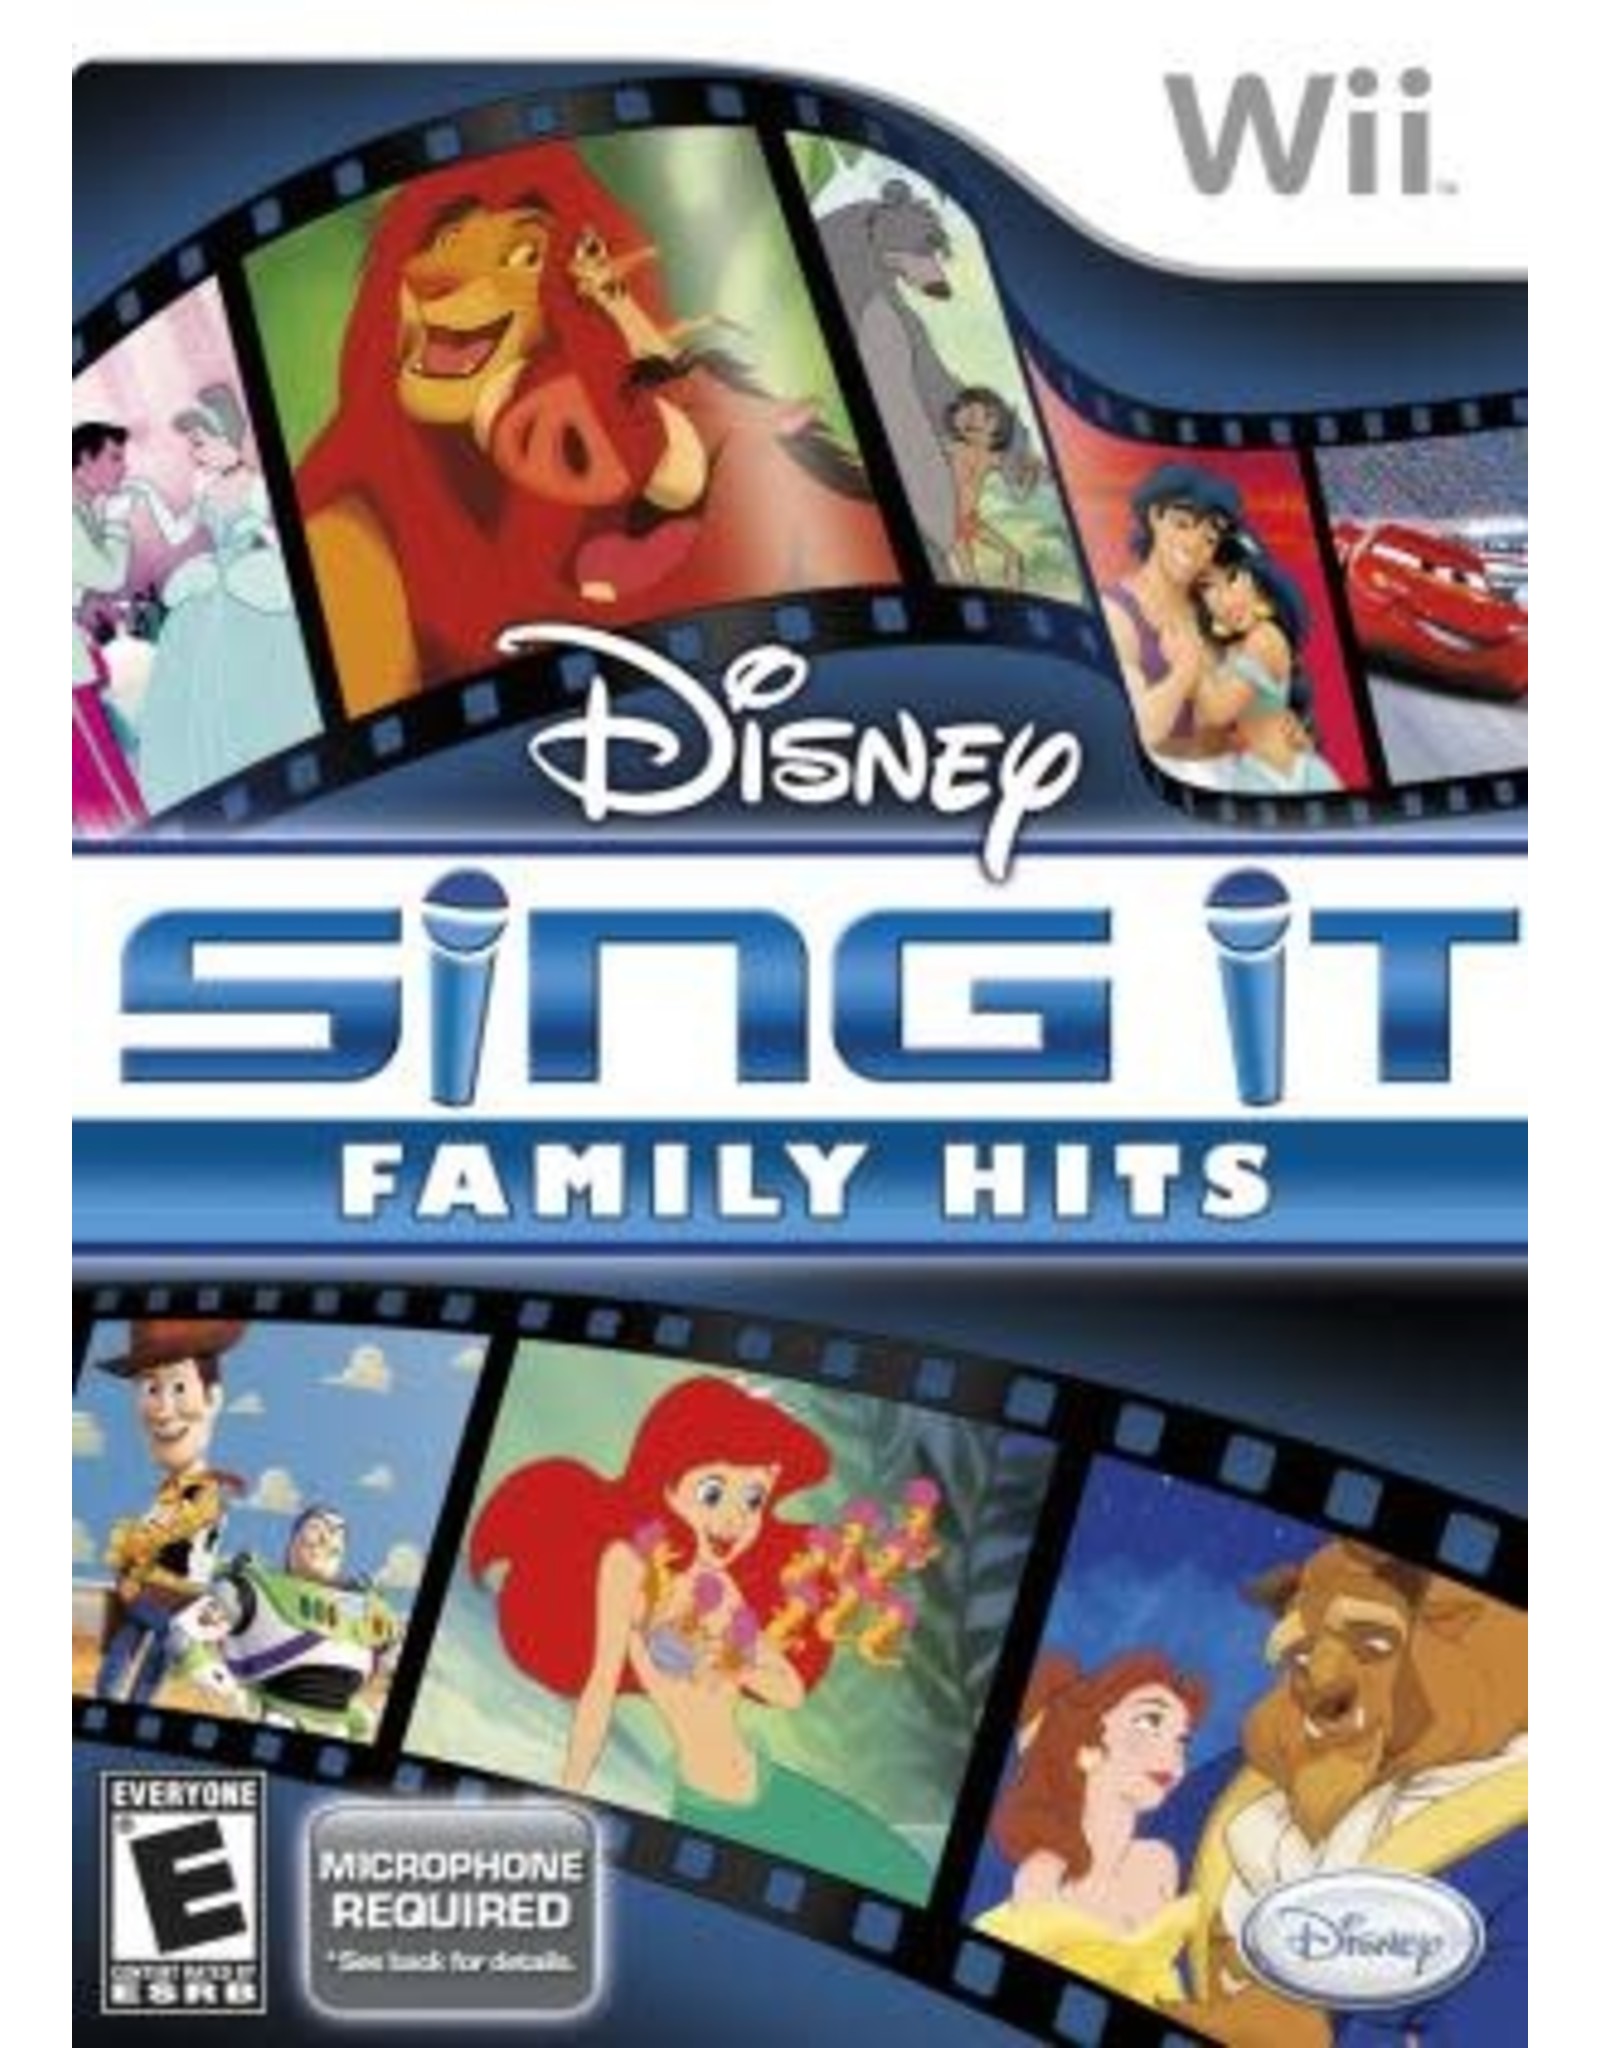 Wii Disney Sing It: Family Hits (CiB)